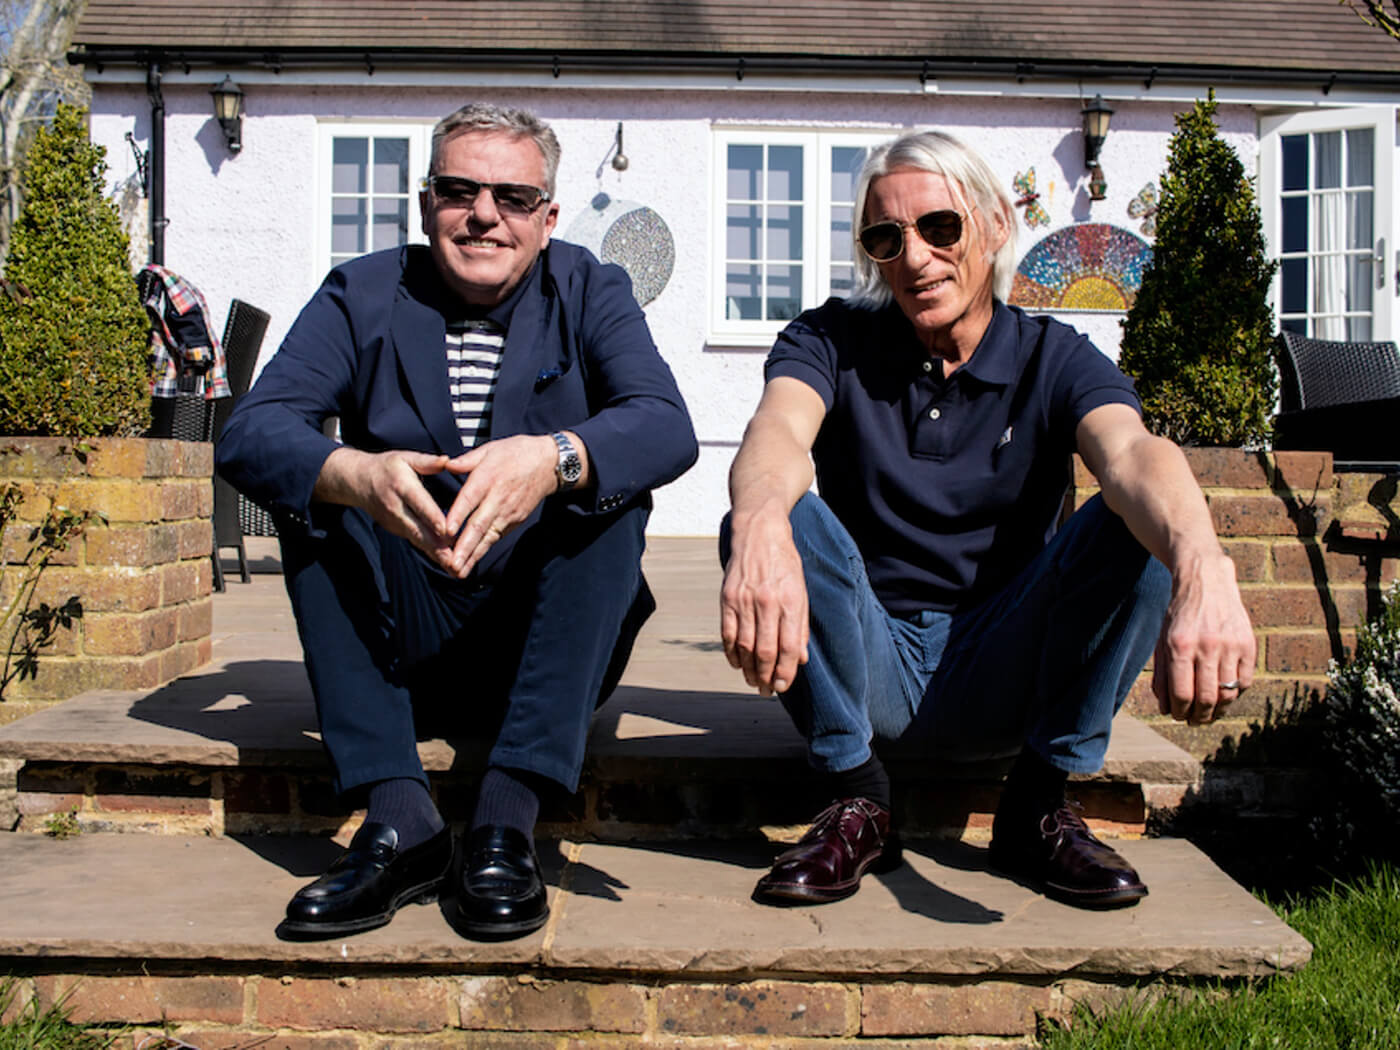 Paul Weller and Suggs team up on new single “Ooh Do U Fink U R”